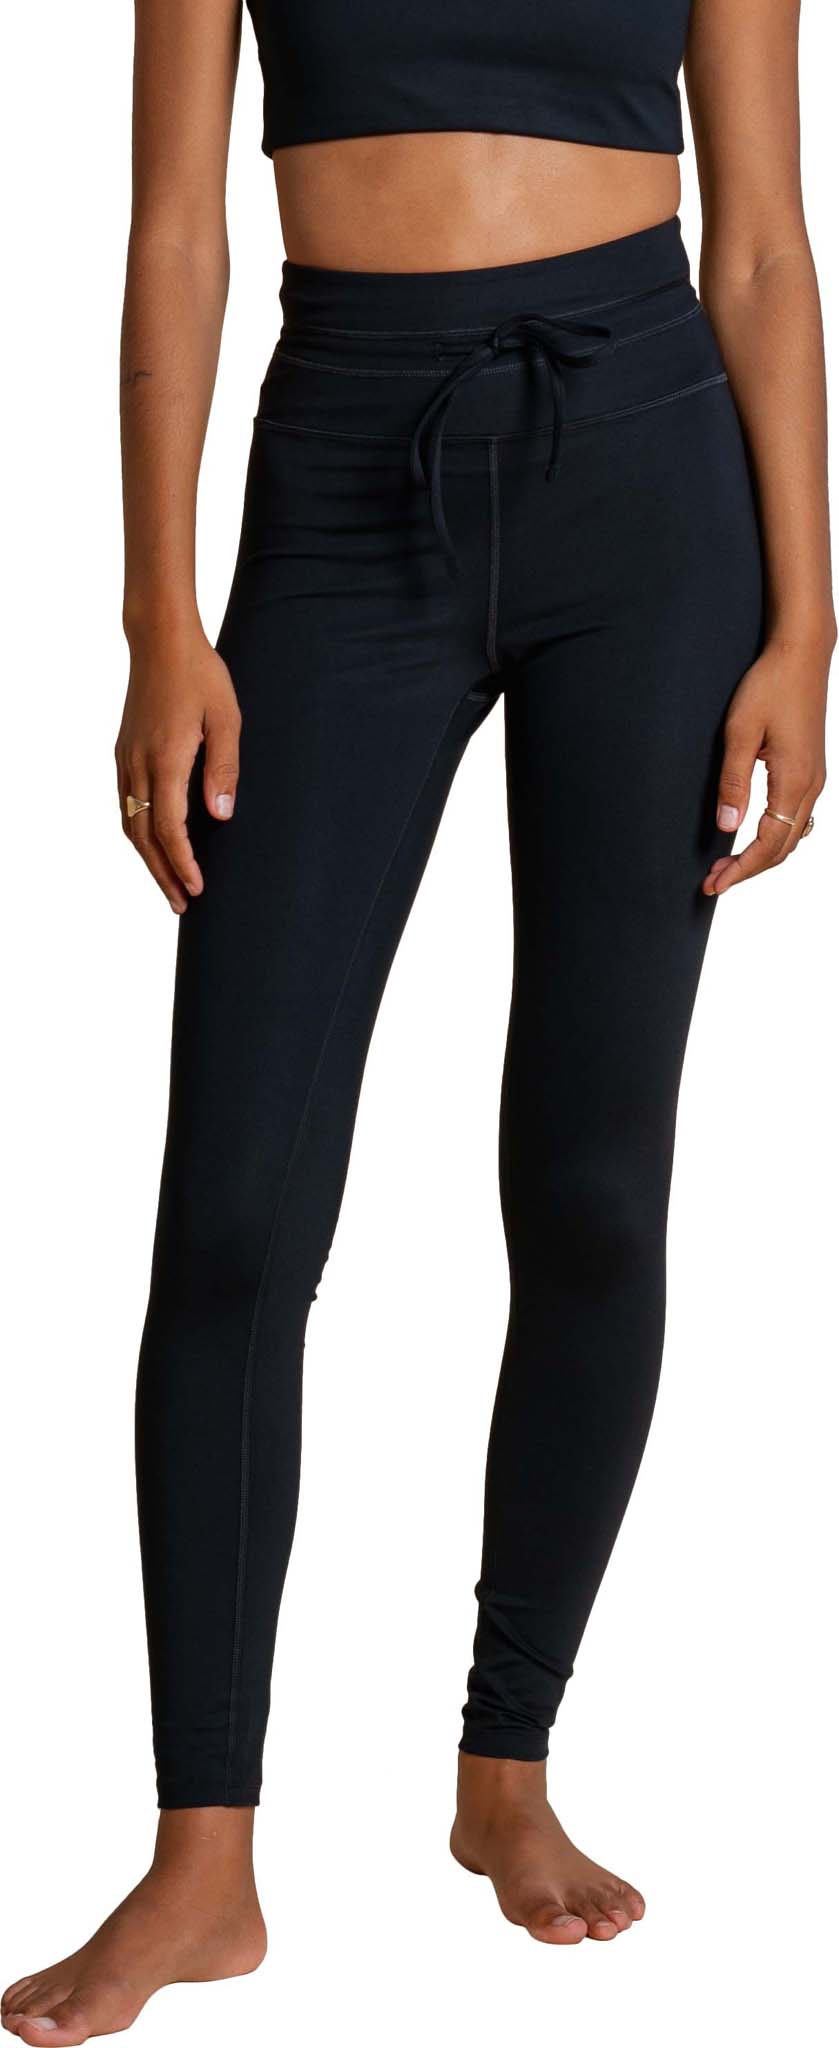 Girlfriend Collective Compressive High-Rise Pocket Legging (28.5 inseam)  in Black